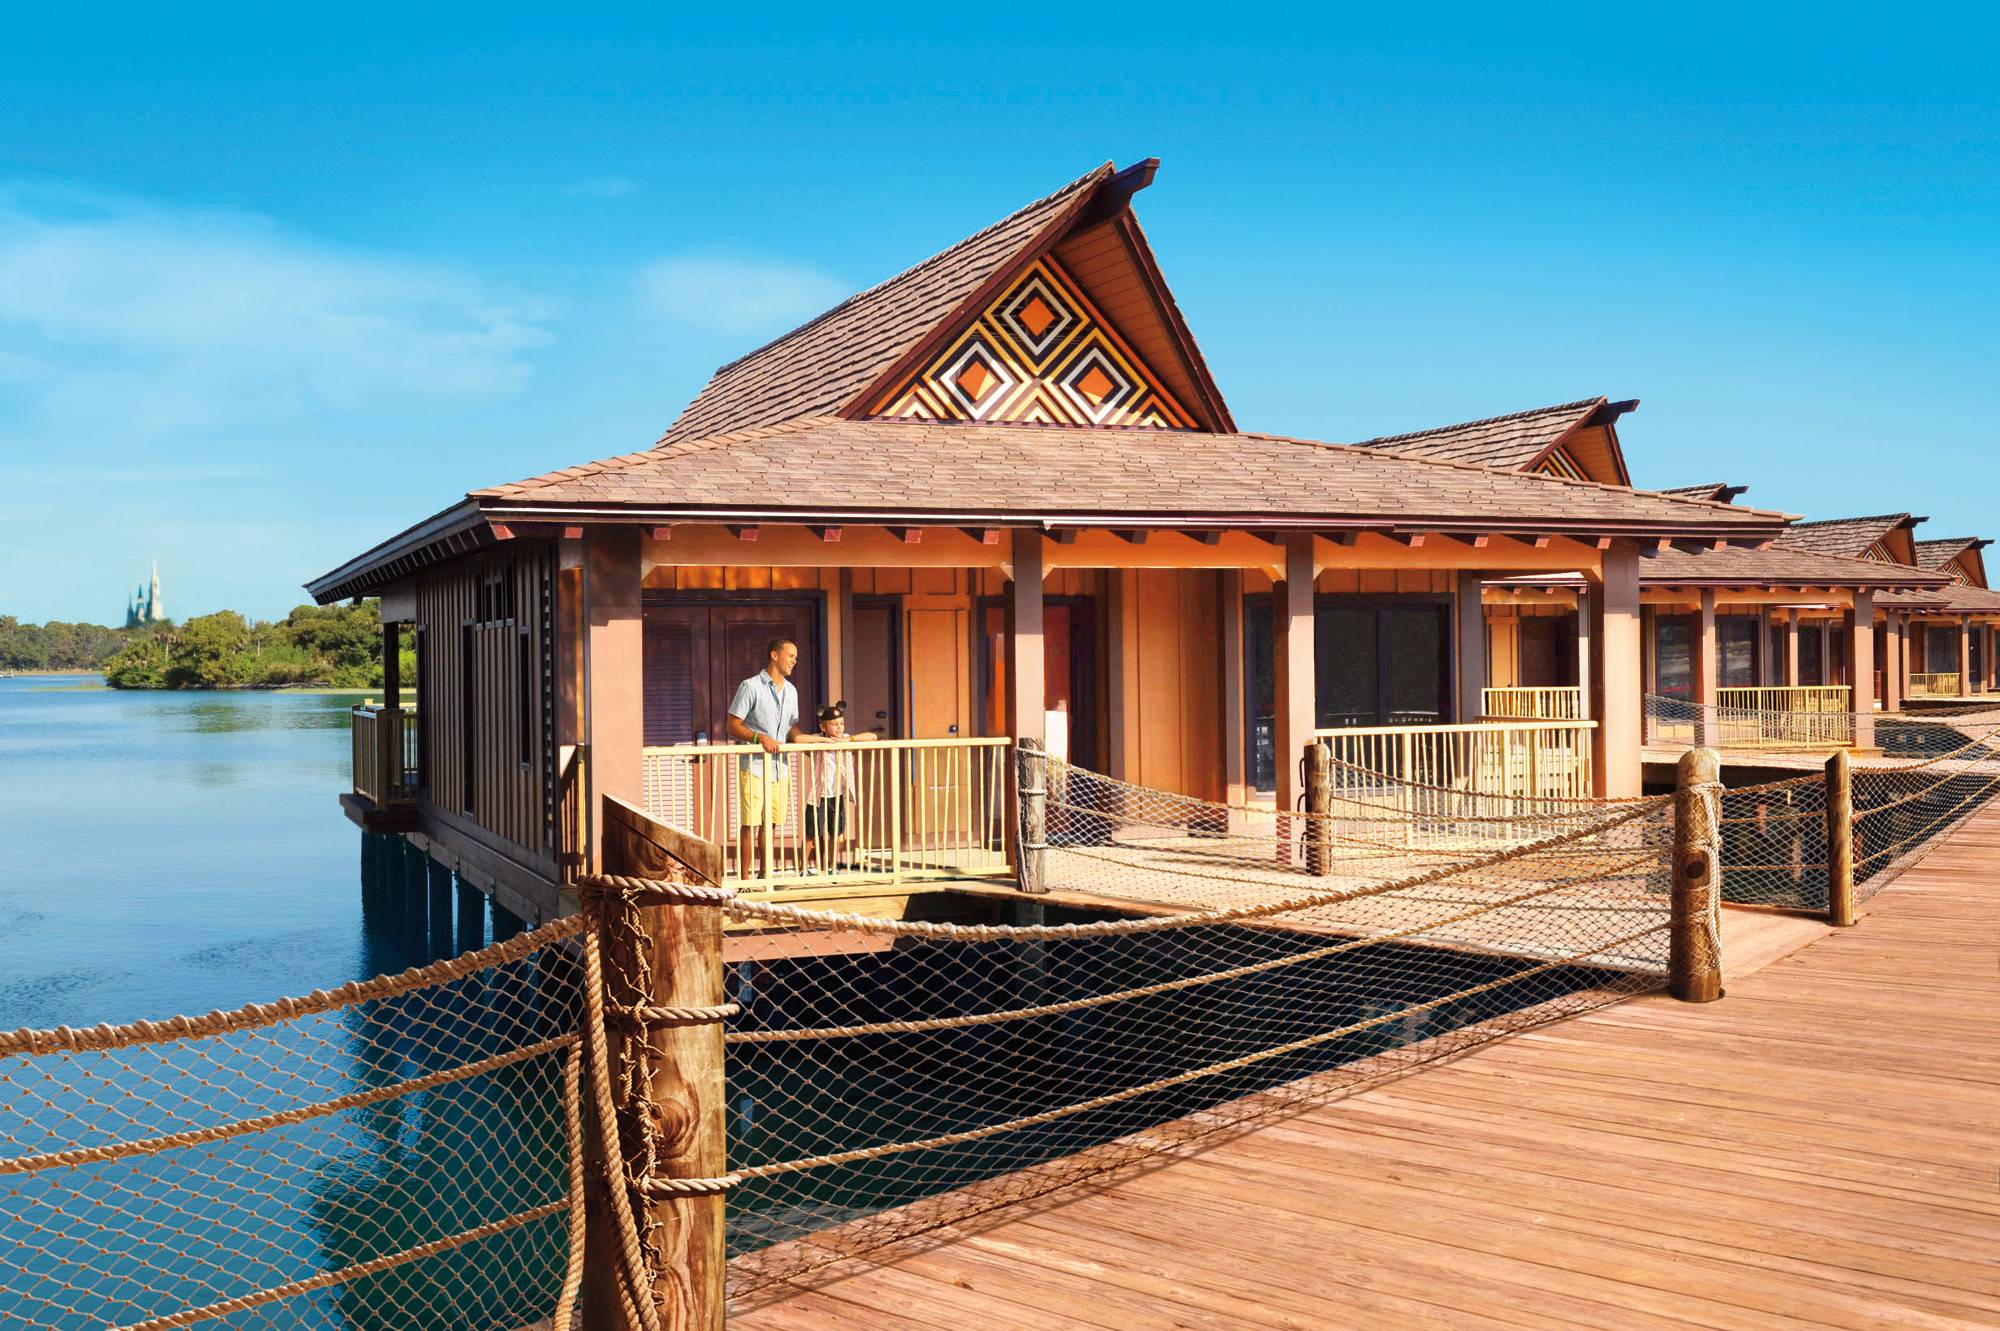 Disney Vacation Club Bora Bora Bungalows and Deluxe Studios at Disney's Polynesian Village Resort begin sales next week